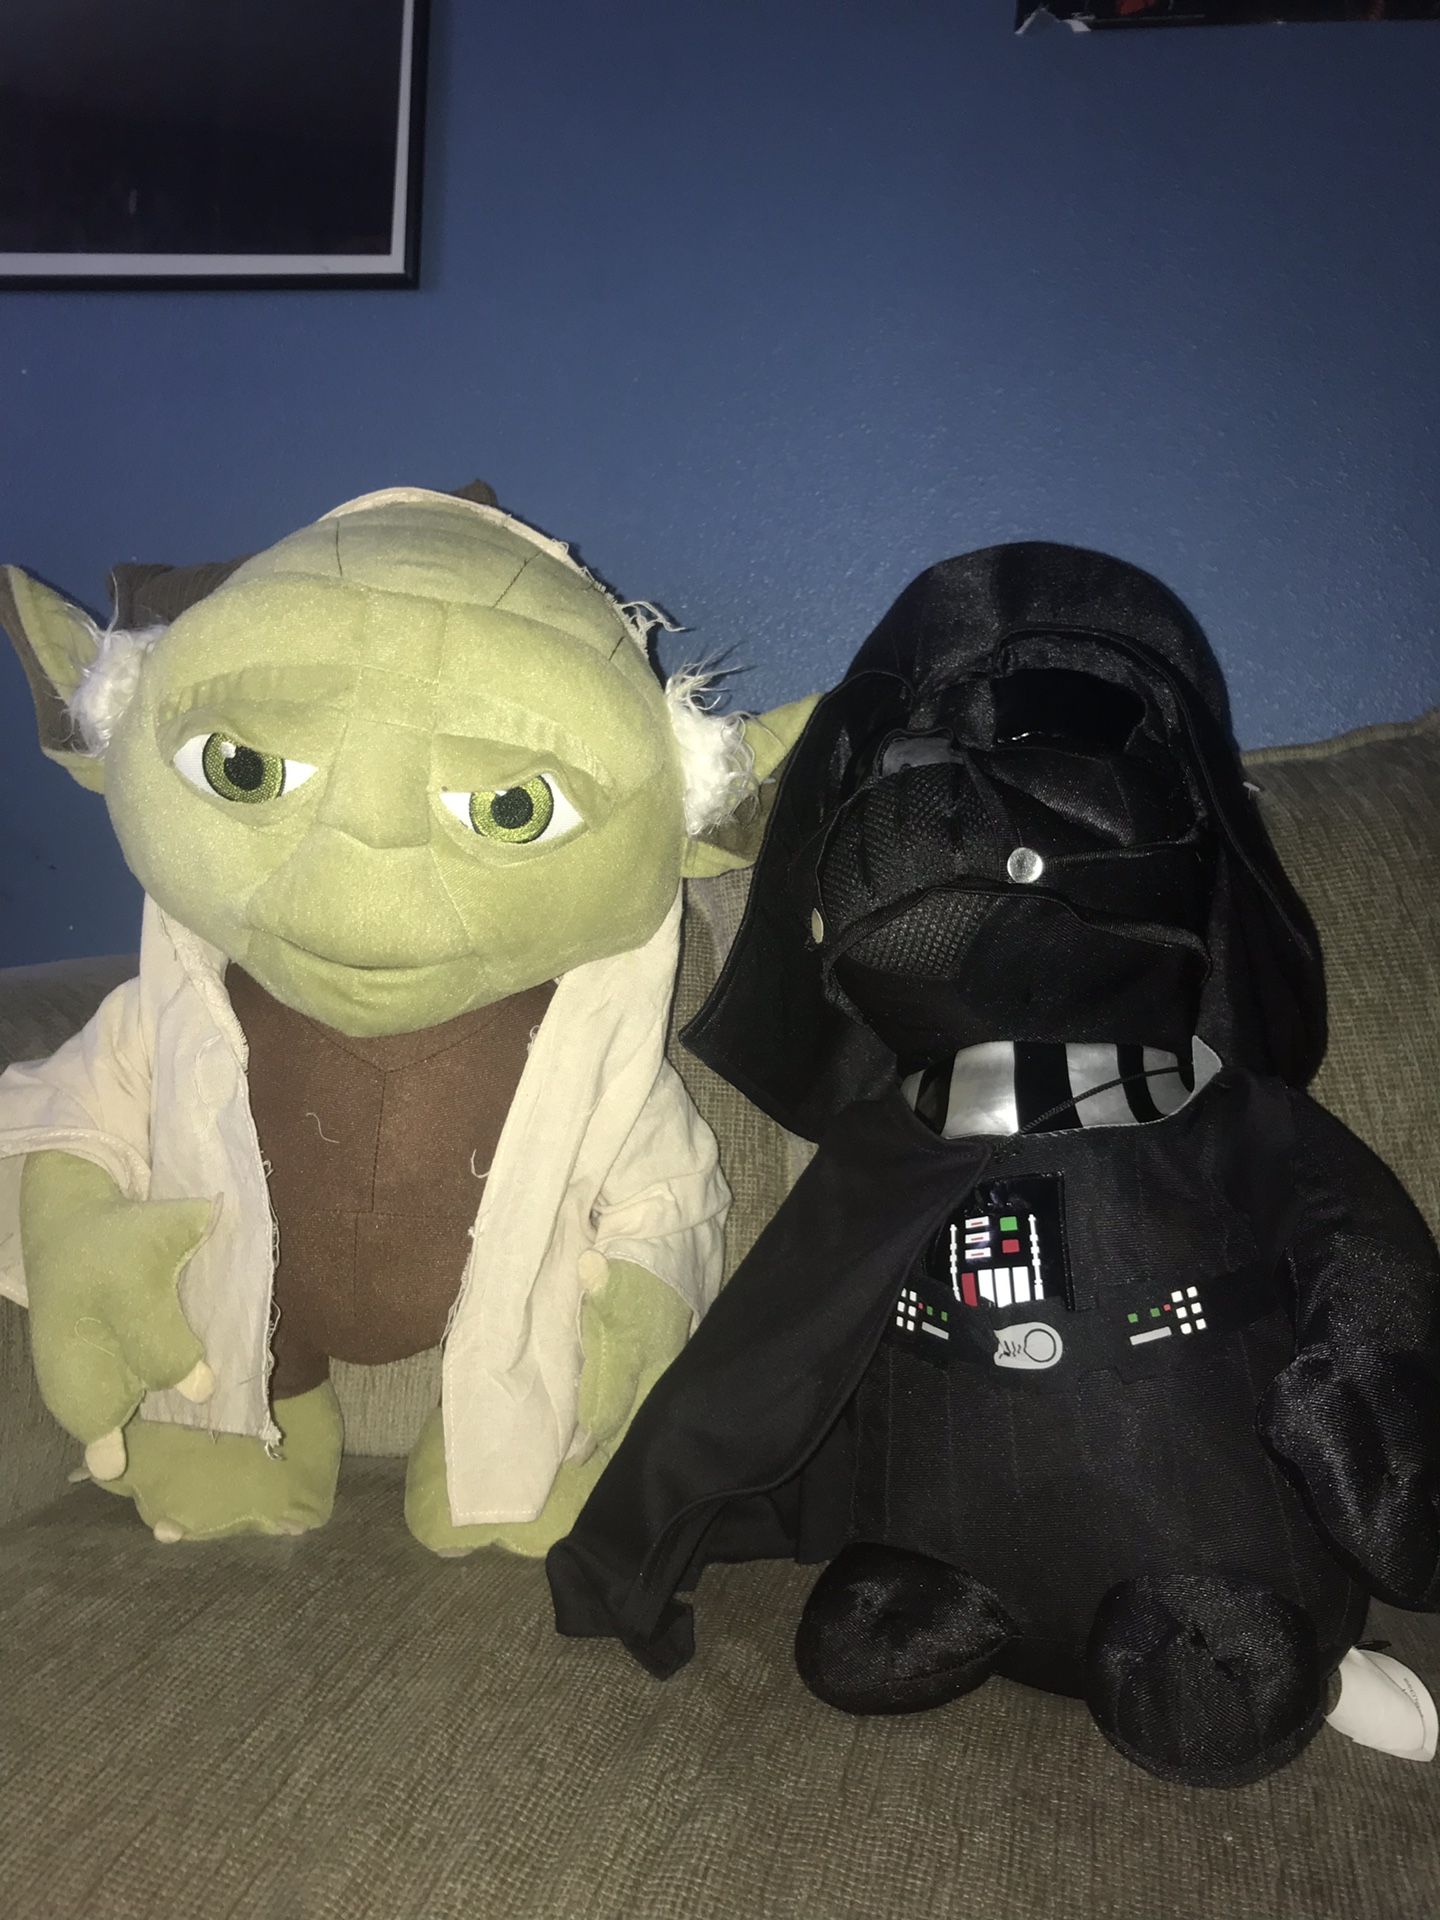 Star Wars Stuffed animal